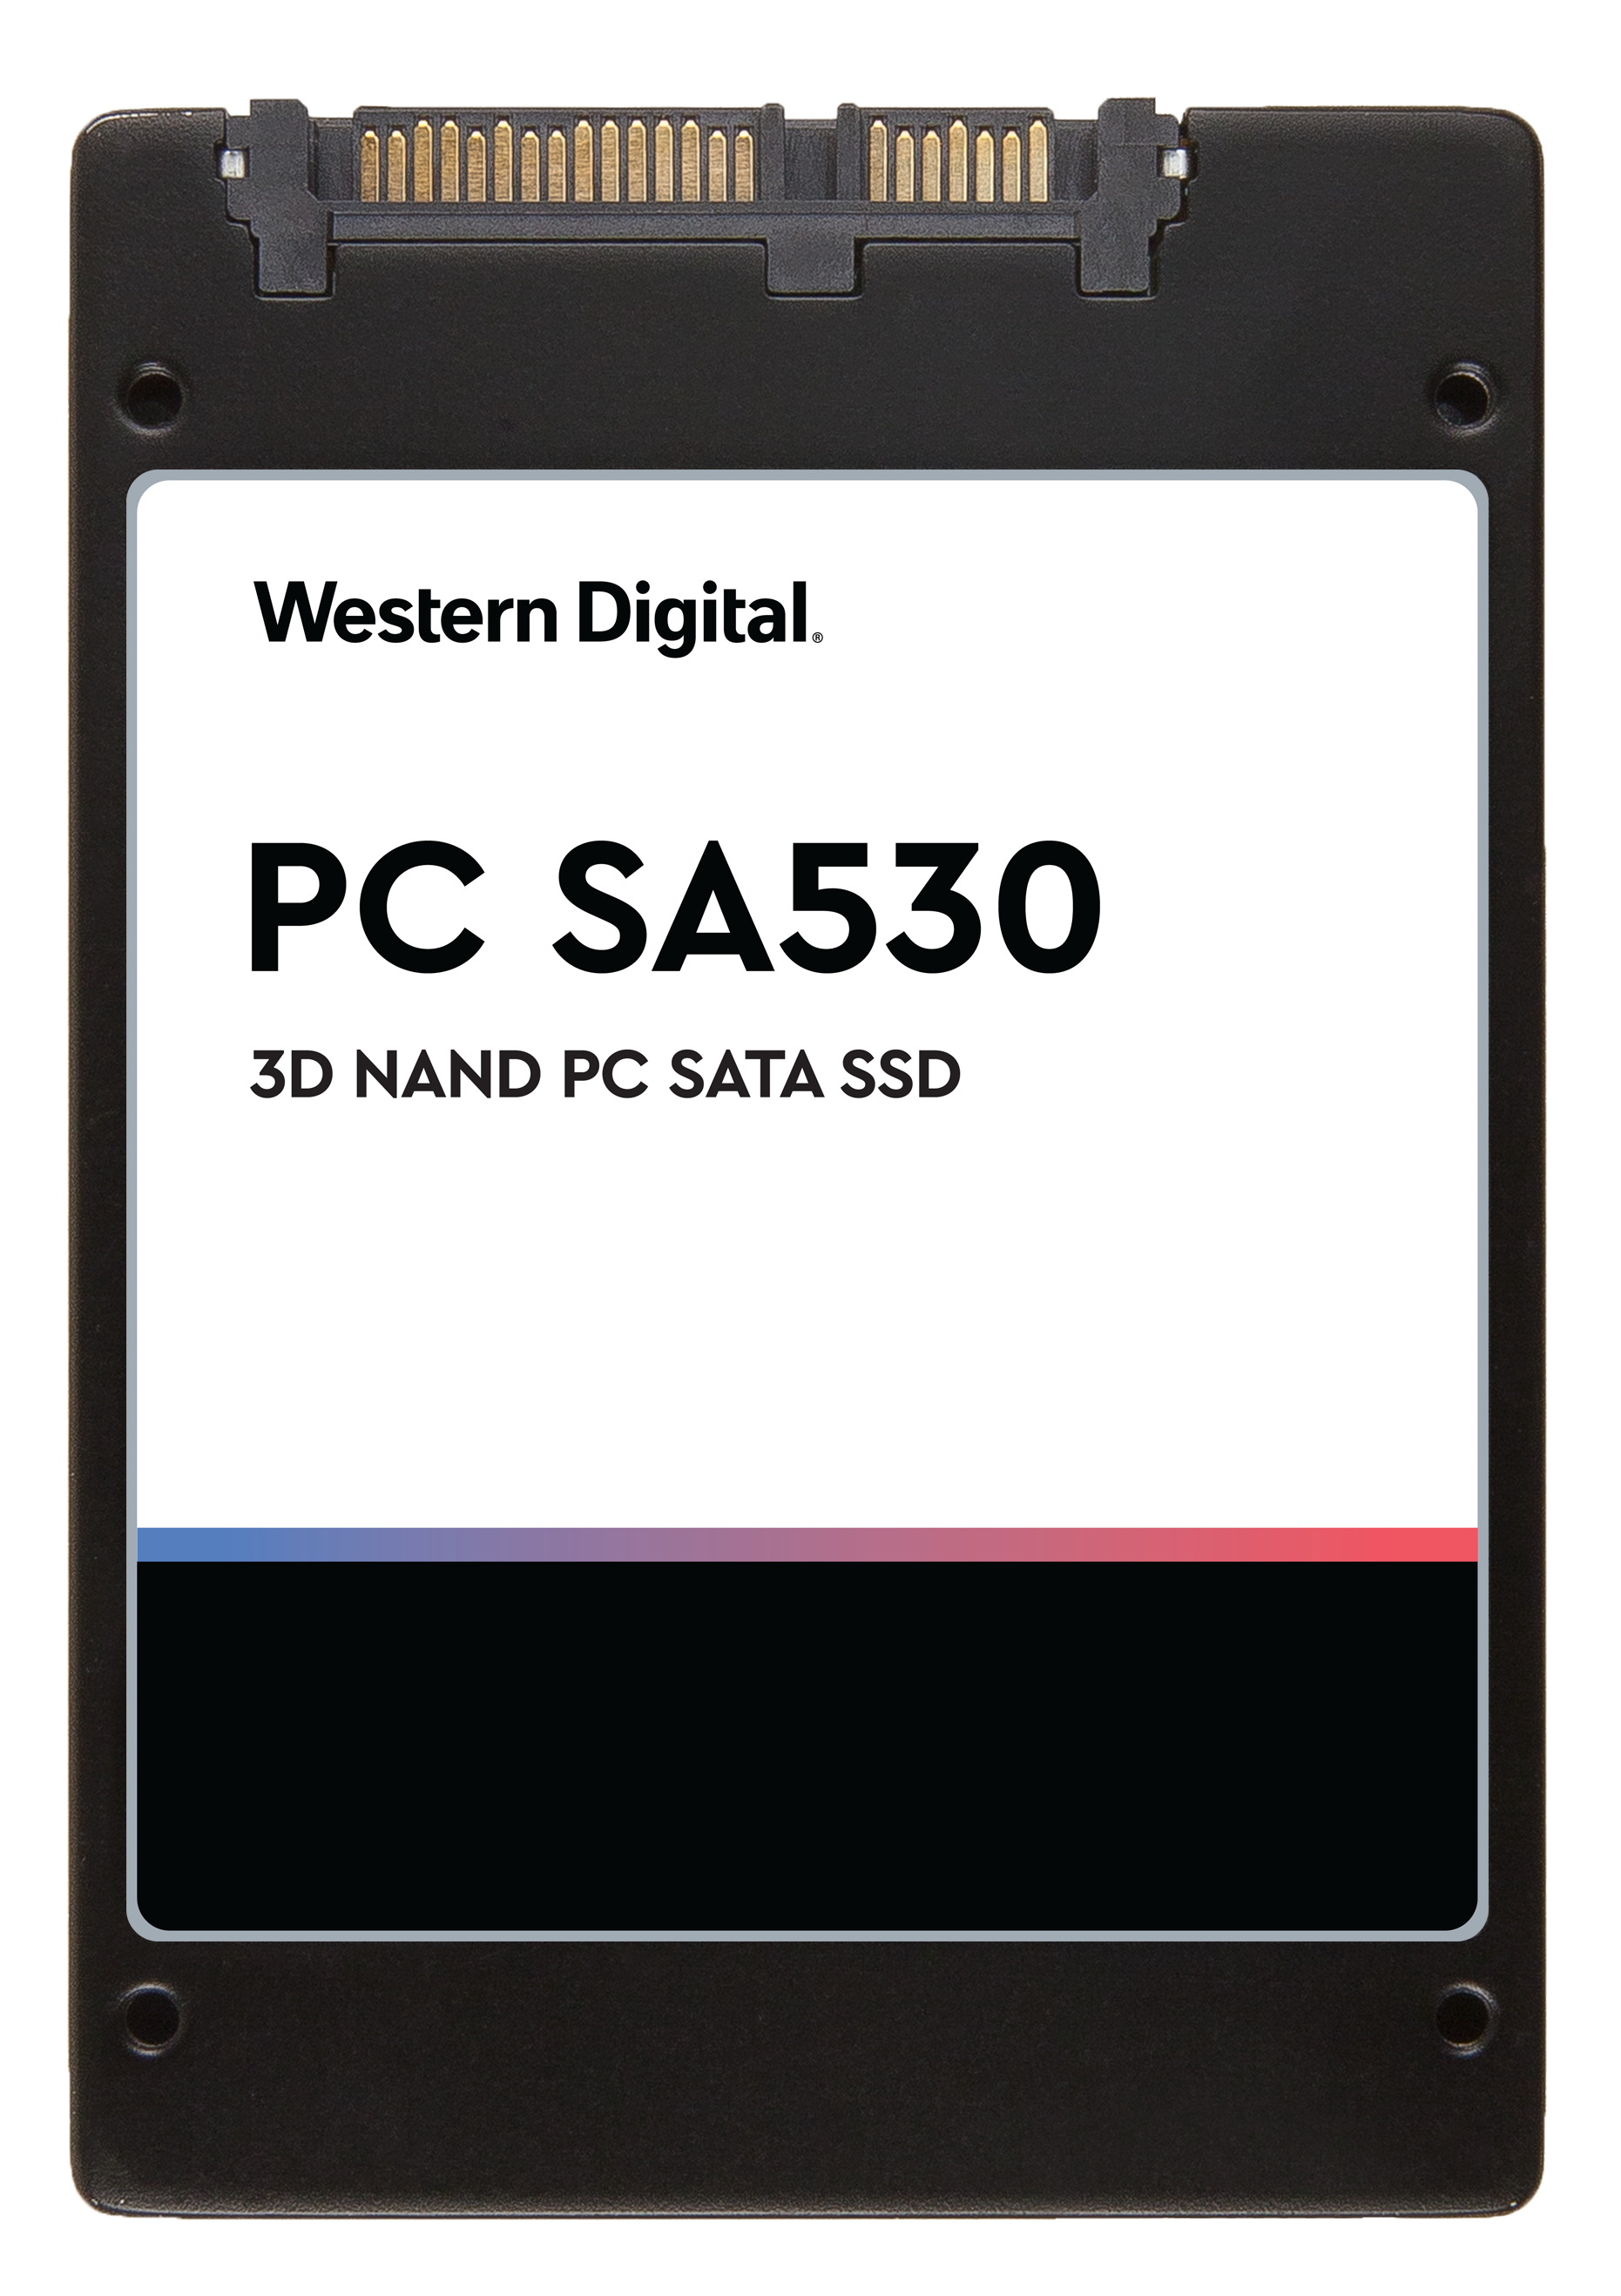 SanDisk Ultra 3D 2.5 2 To Série ATA III